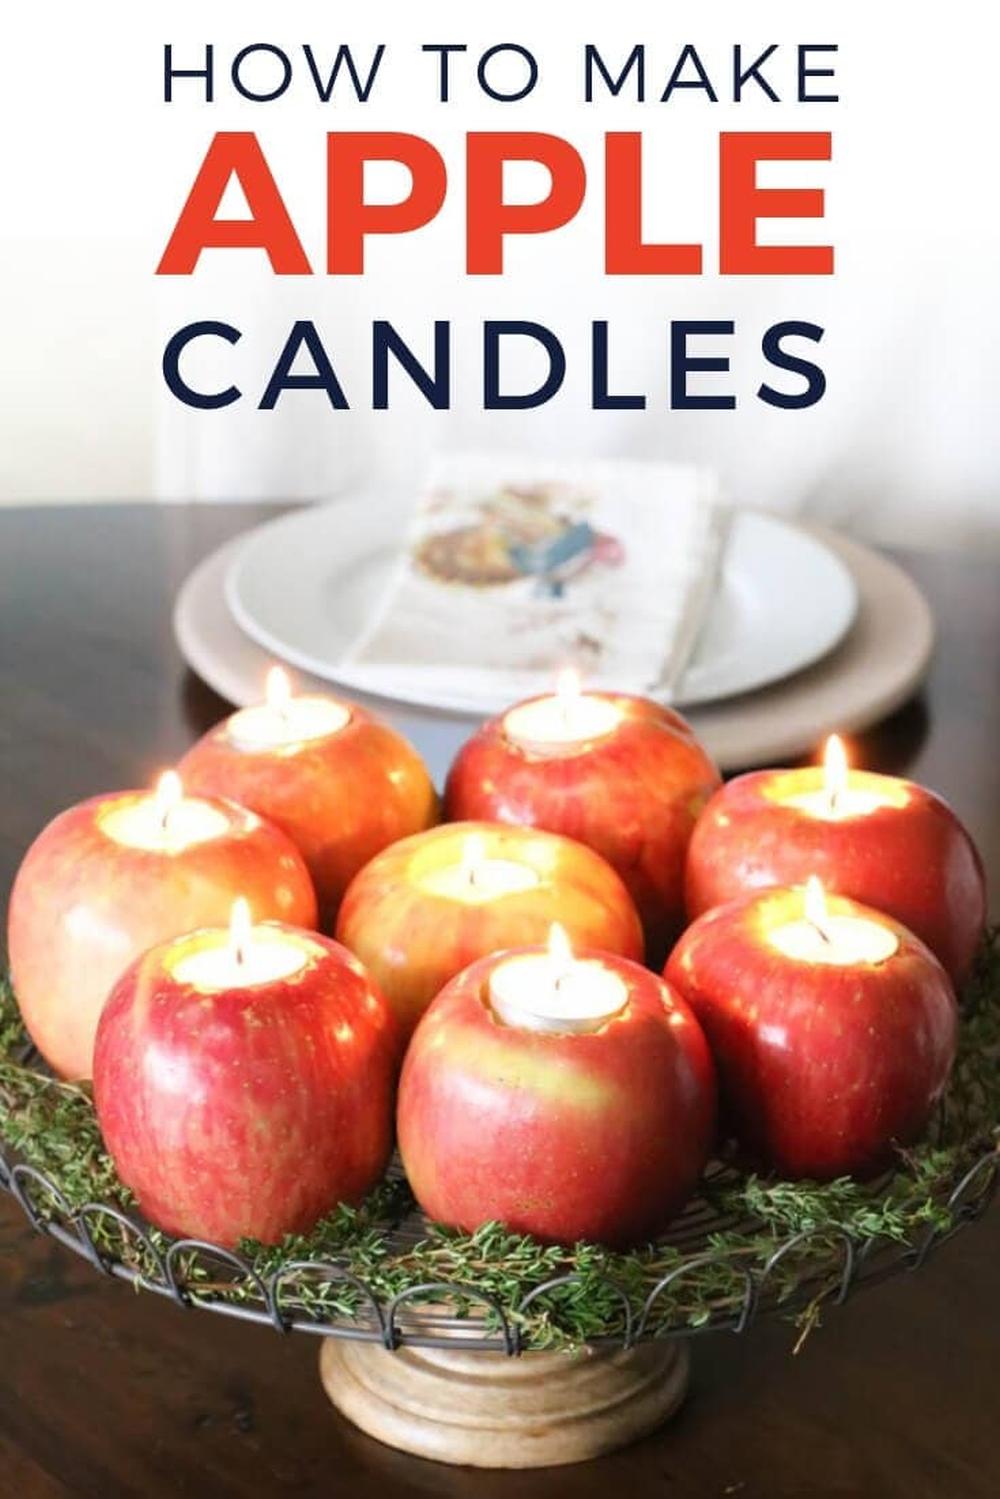 Apple candles thanksgiving centerpiece